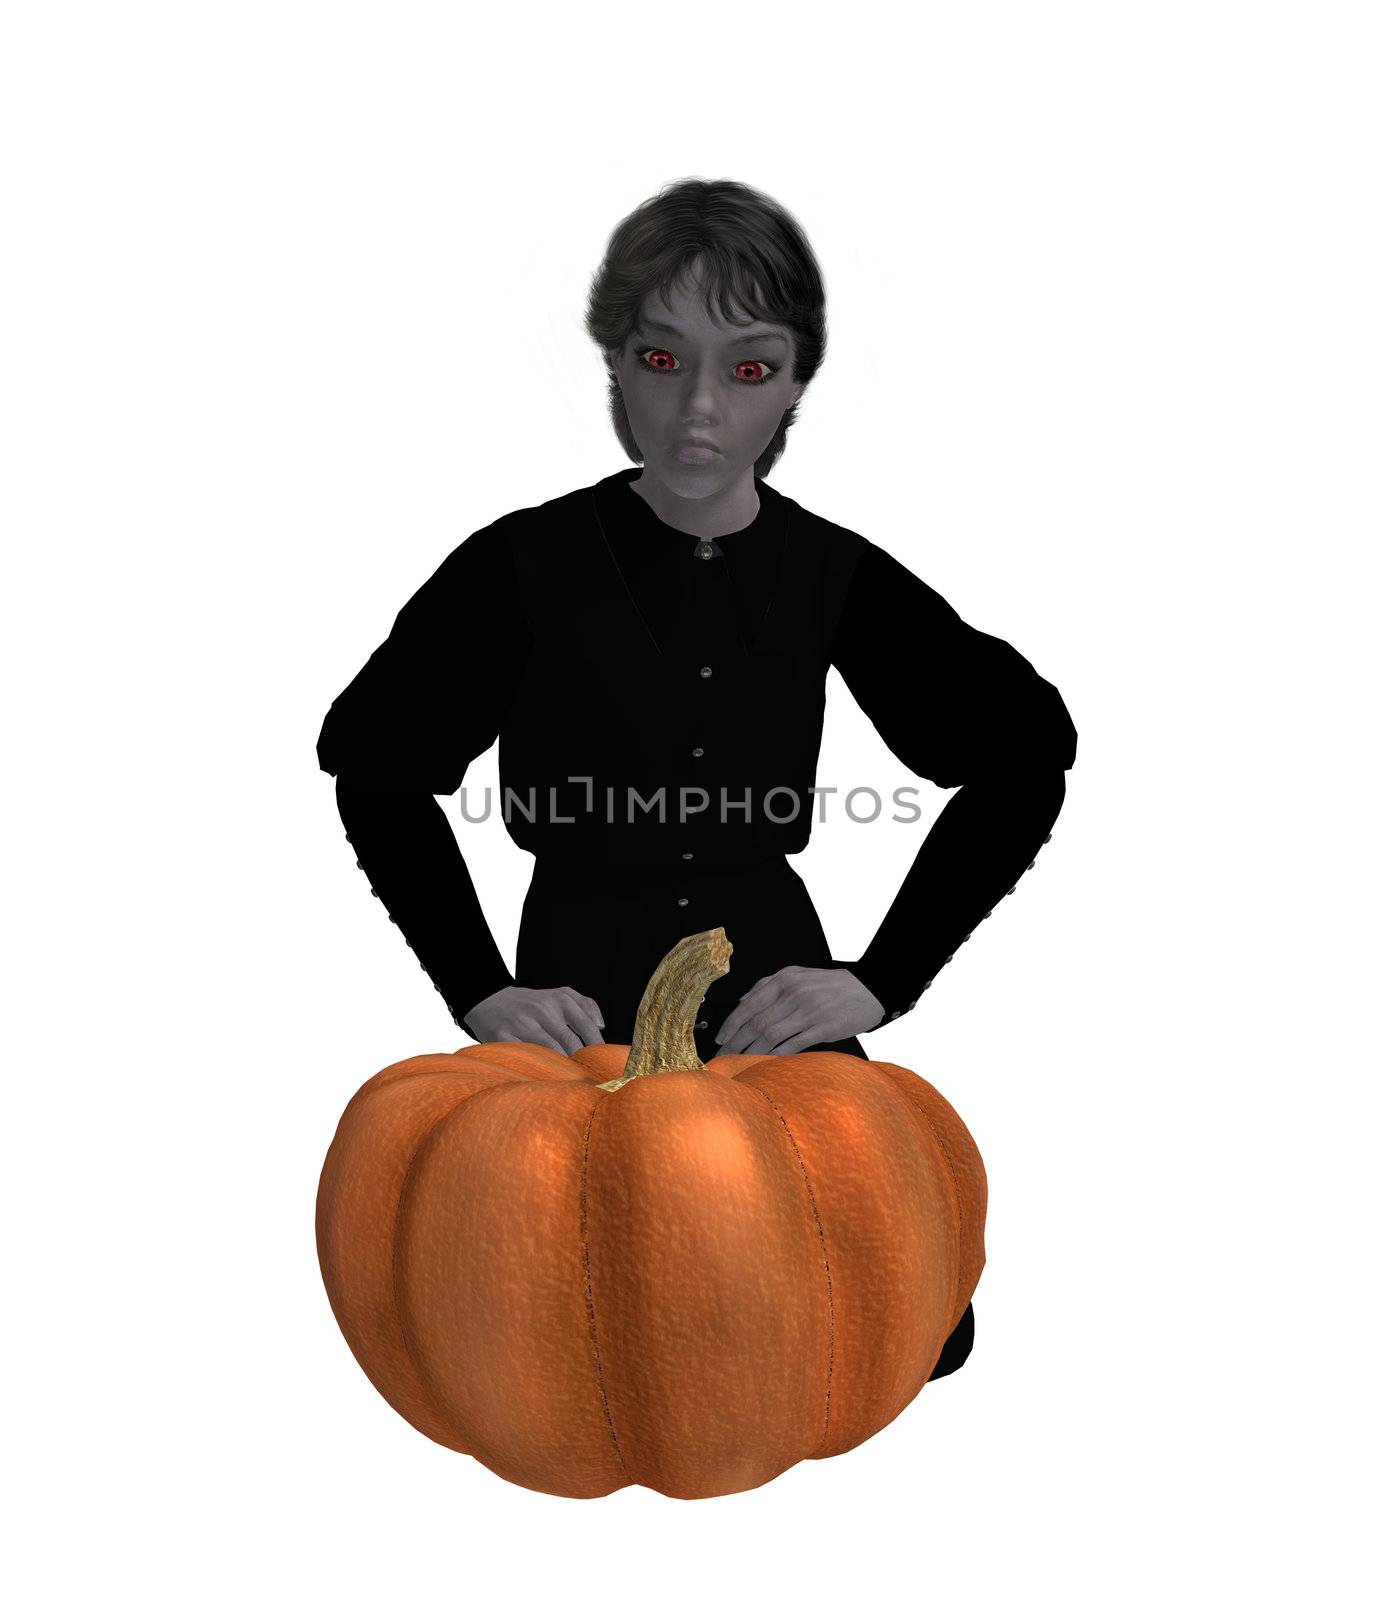 A boy sitting behind a pumpkin